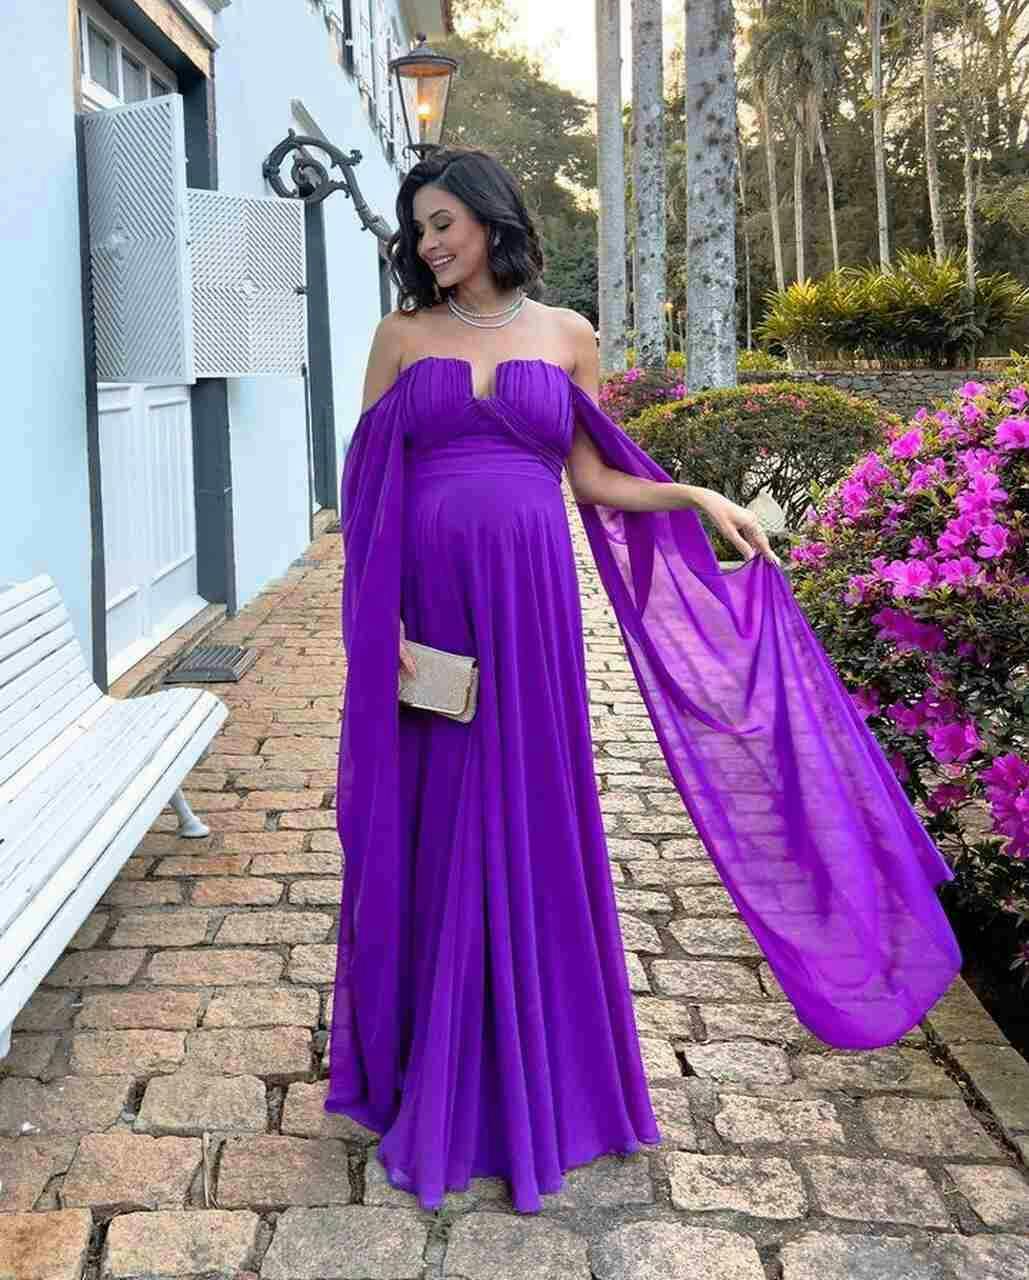 dress evening dress formal wear purple fashion gown adult female person woman